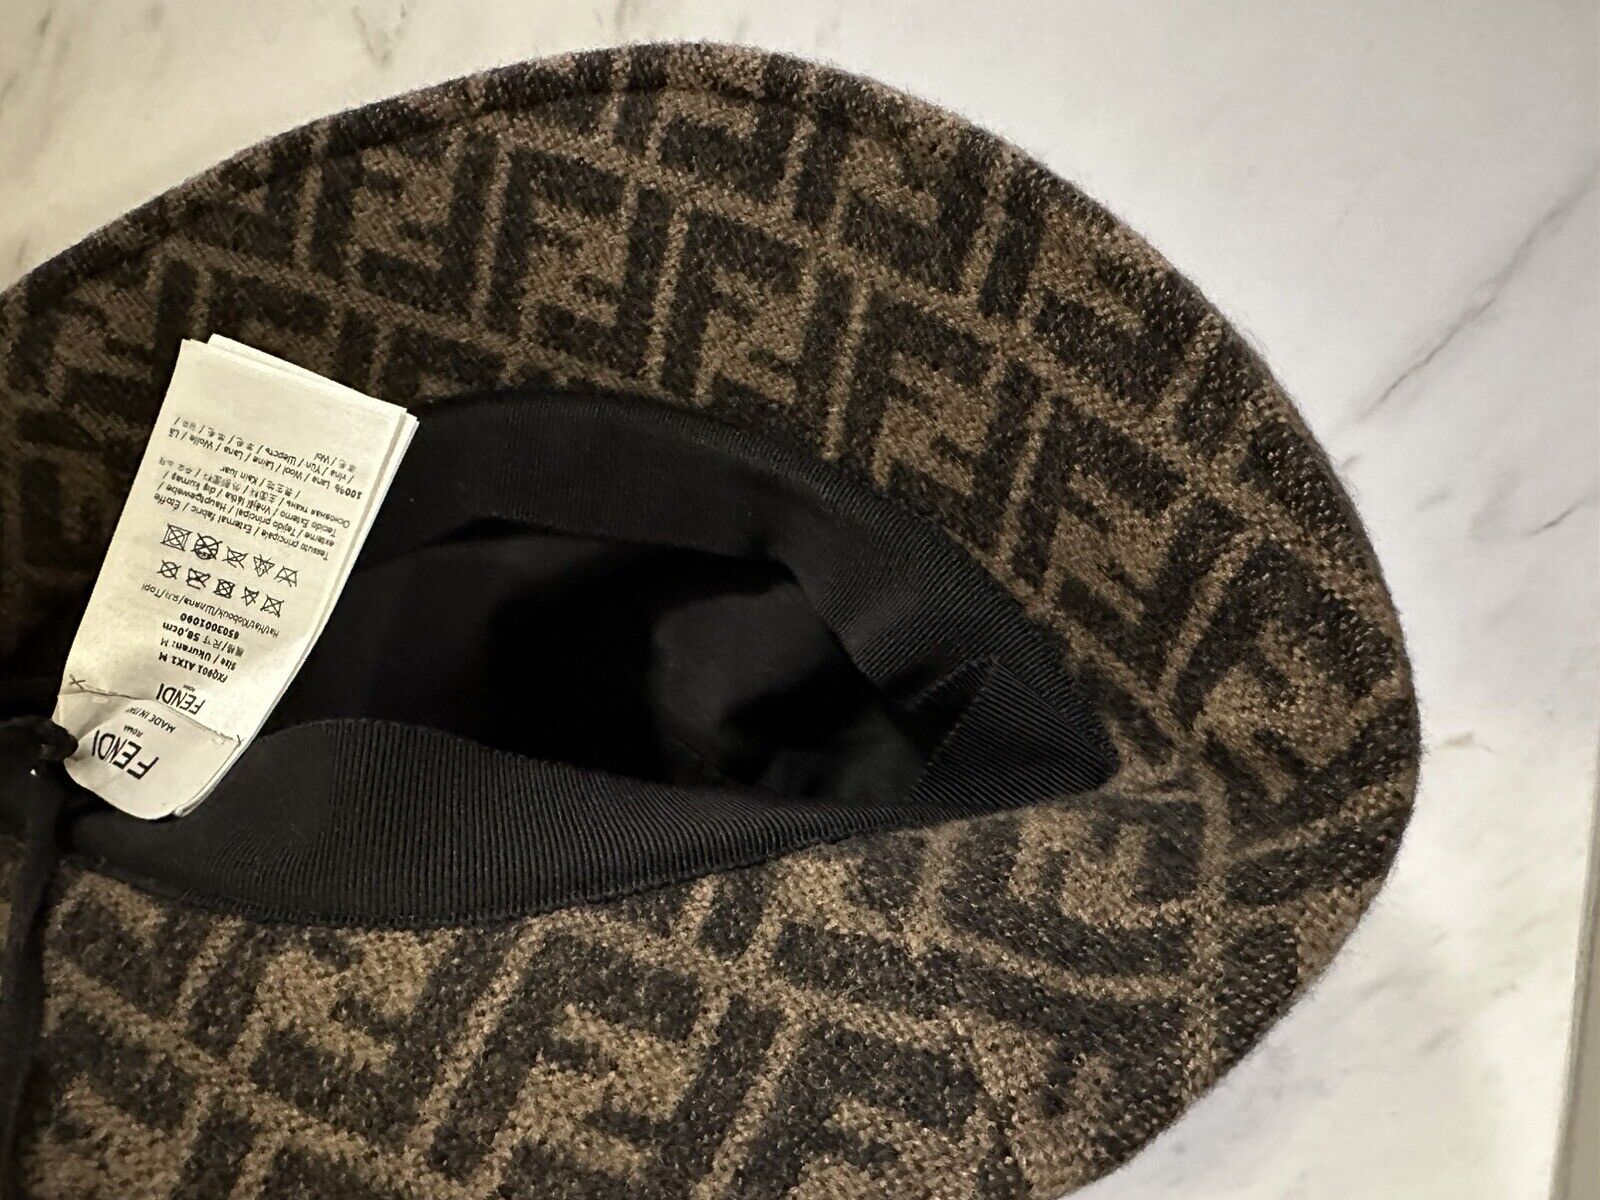 NWT $790 Fendi Classic Wool FF Logo Bucket Hat Size M Brown FXQ901